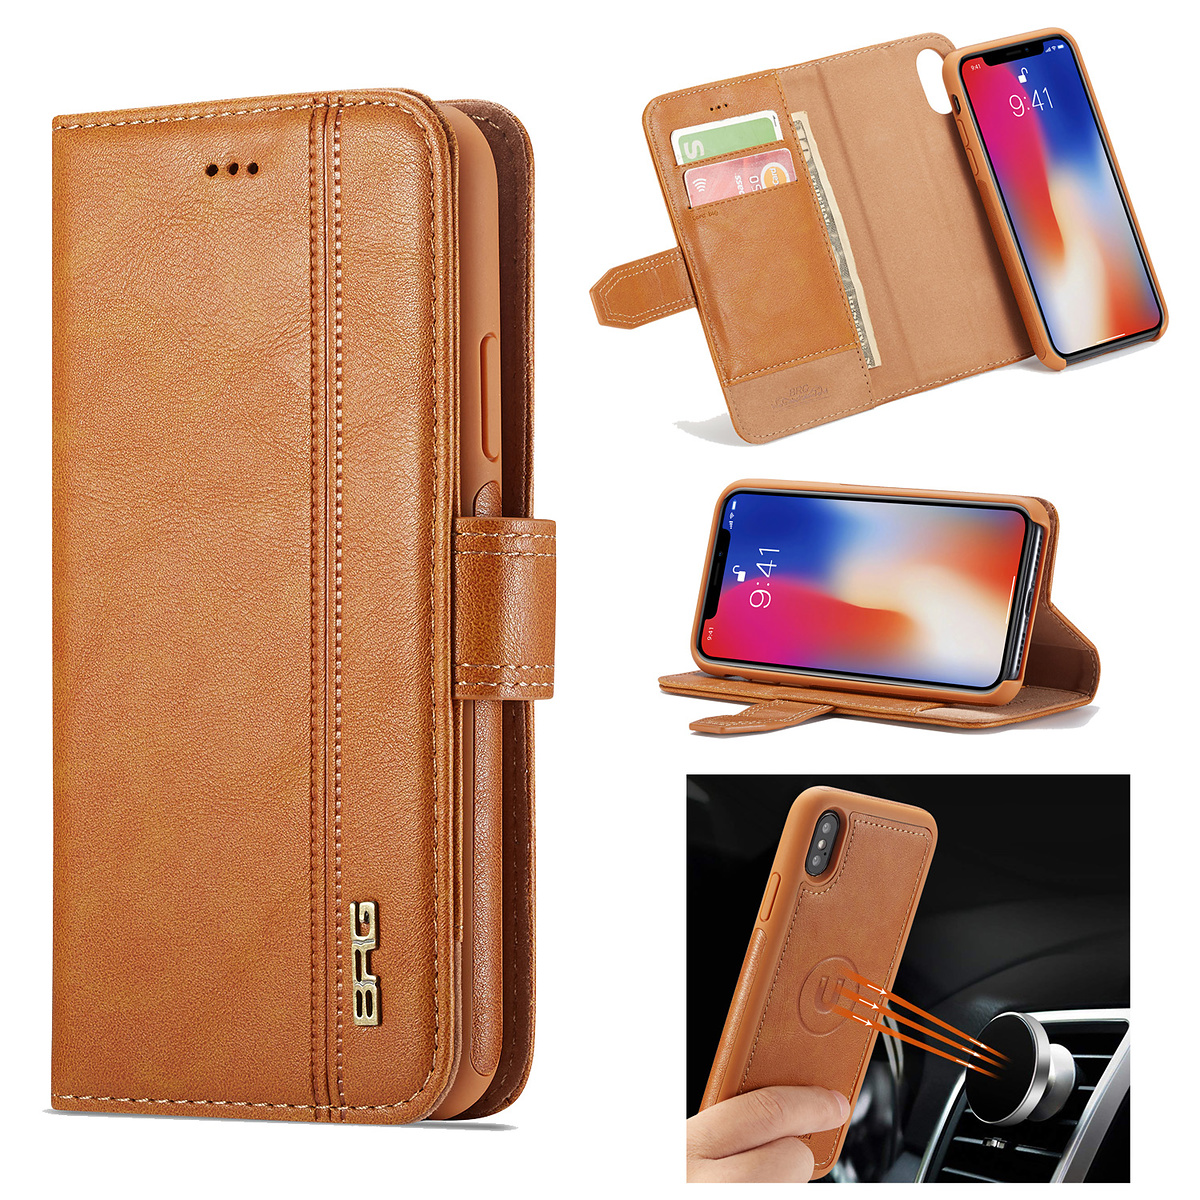 BRG Luxury plånboksfodral med ställ, iPhone X/XS, brun